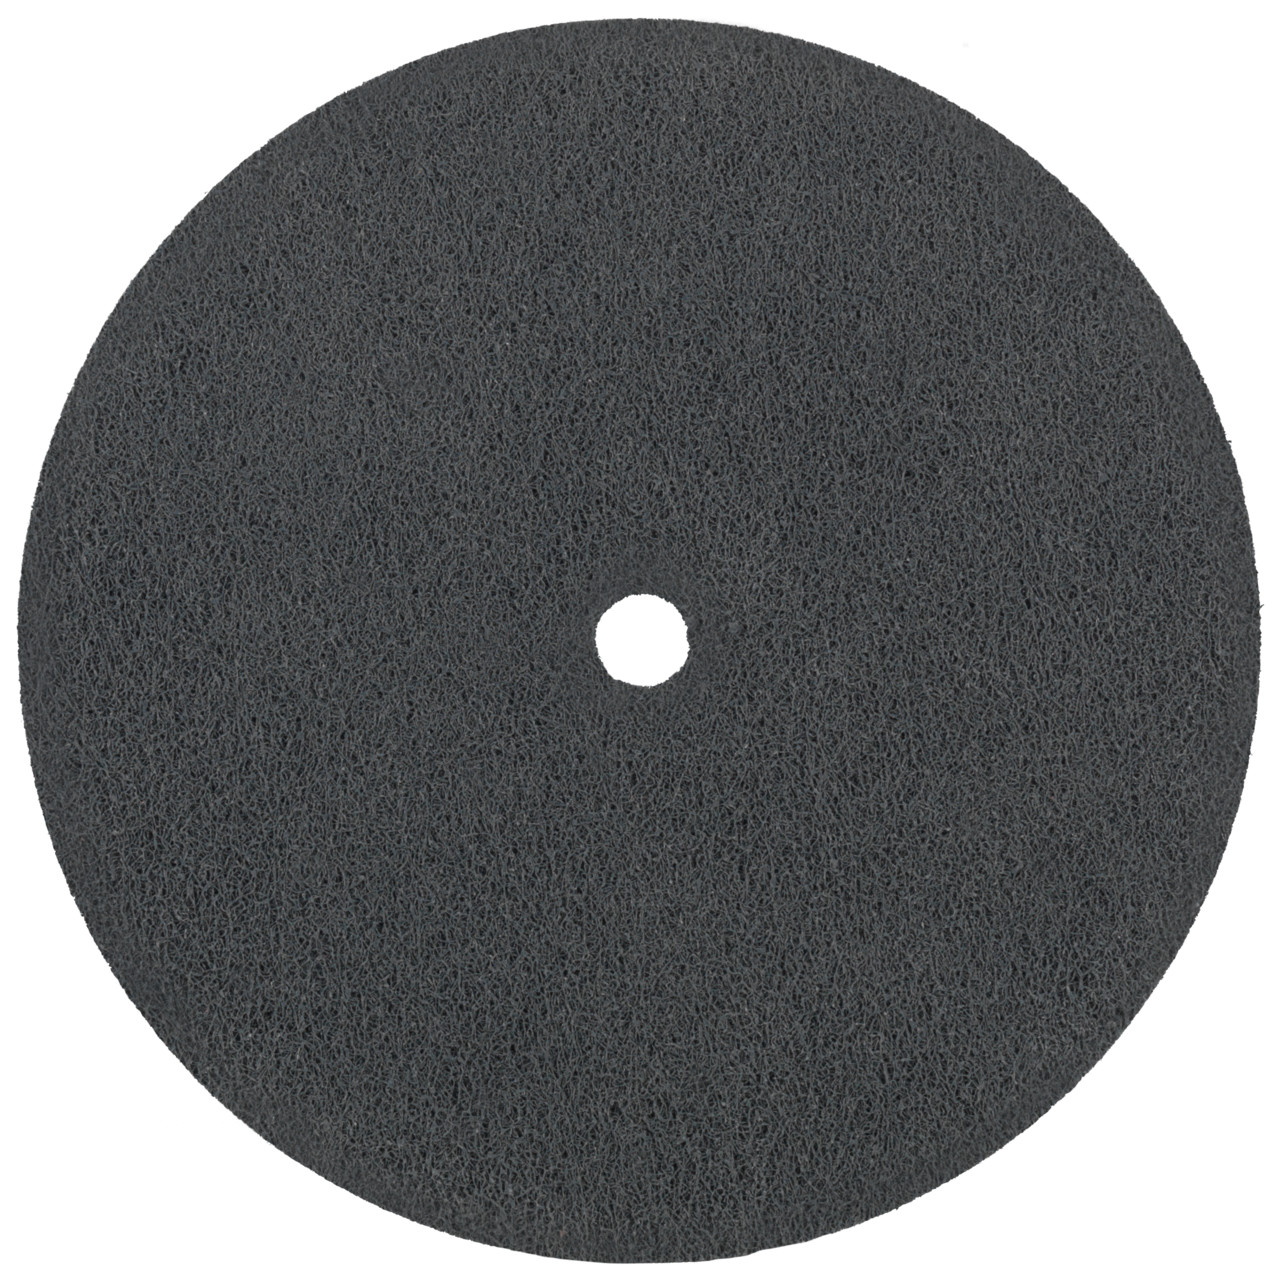 Tyrolit Discos compactos prensados DxDxH 152x25x25,4 Inserto universal, 6 A MEDIO, forma: 1, Art. 34190308